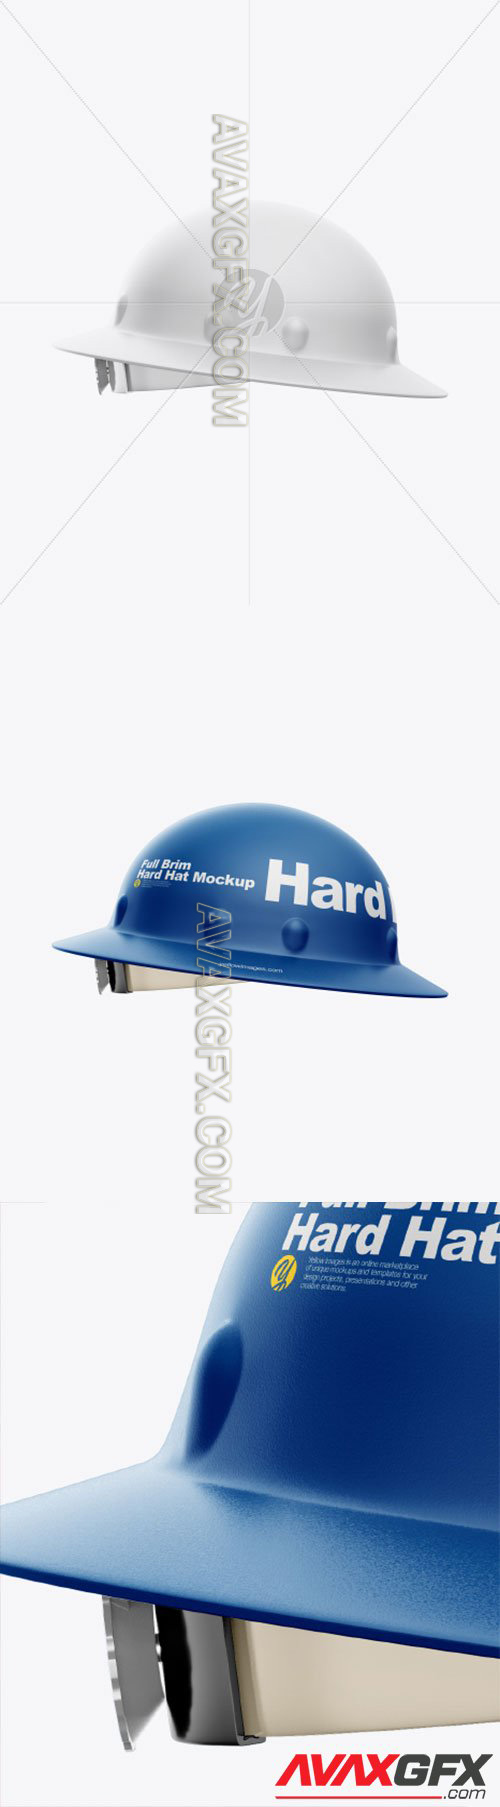 Full Brim Hard Hat Mockup - Side View 28334